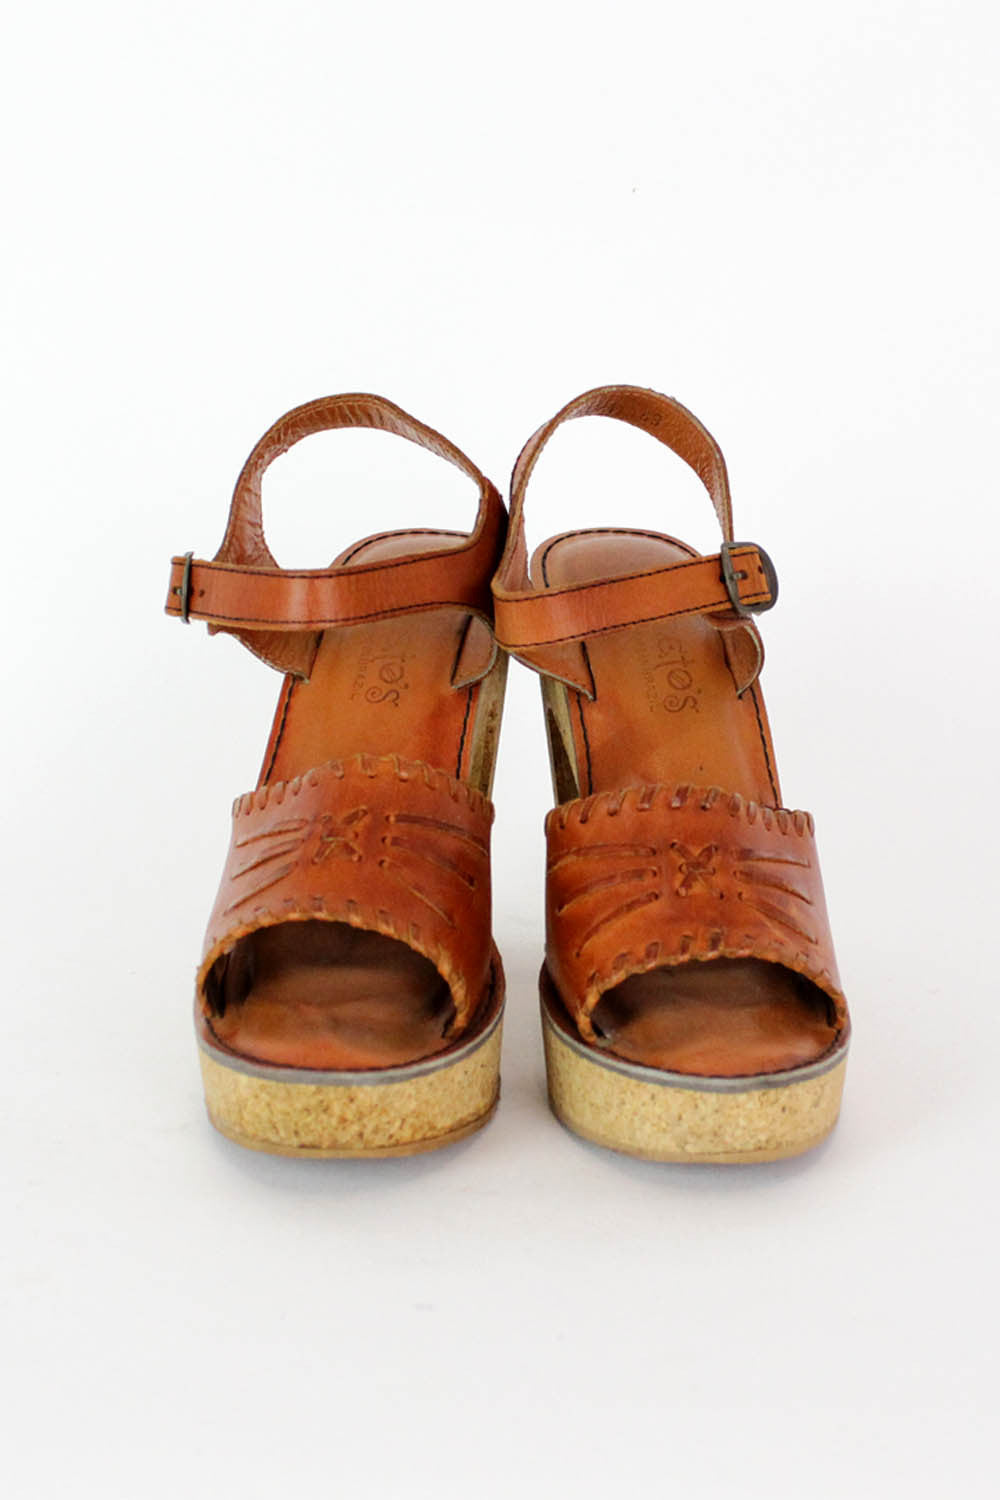 cork platform shoes